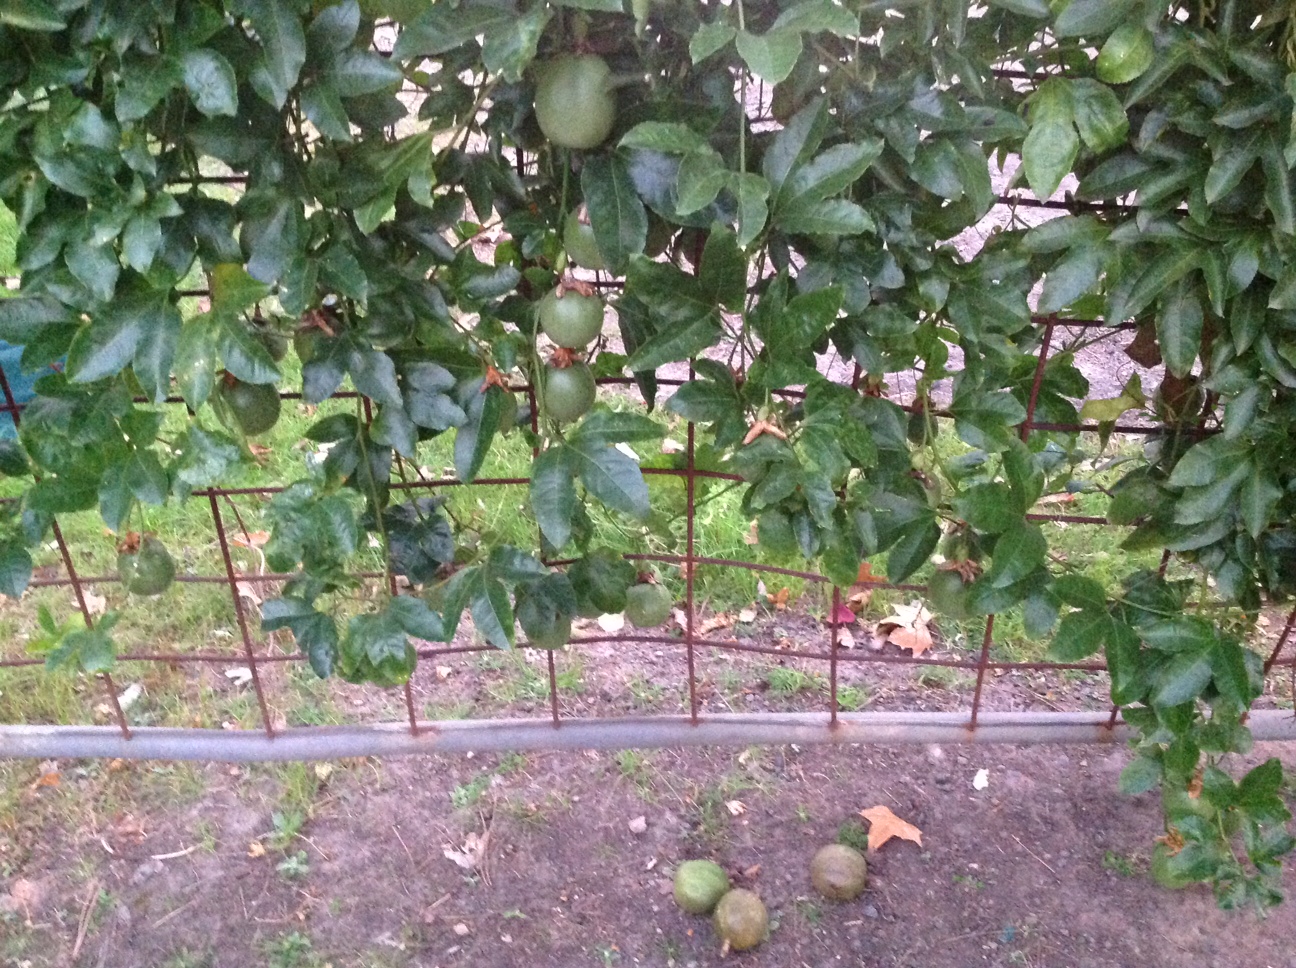 Ripe passionfruit lying beneath the vine.